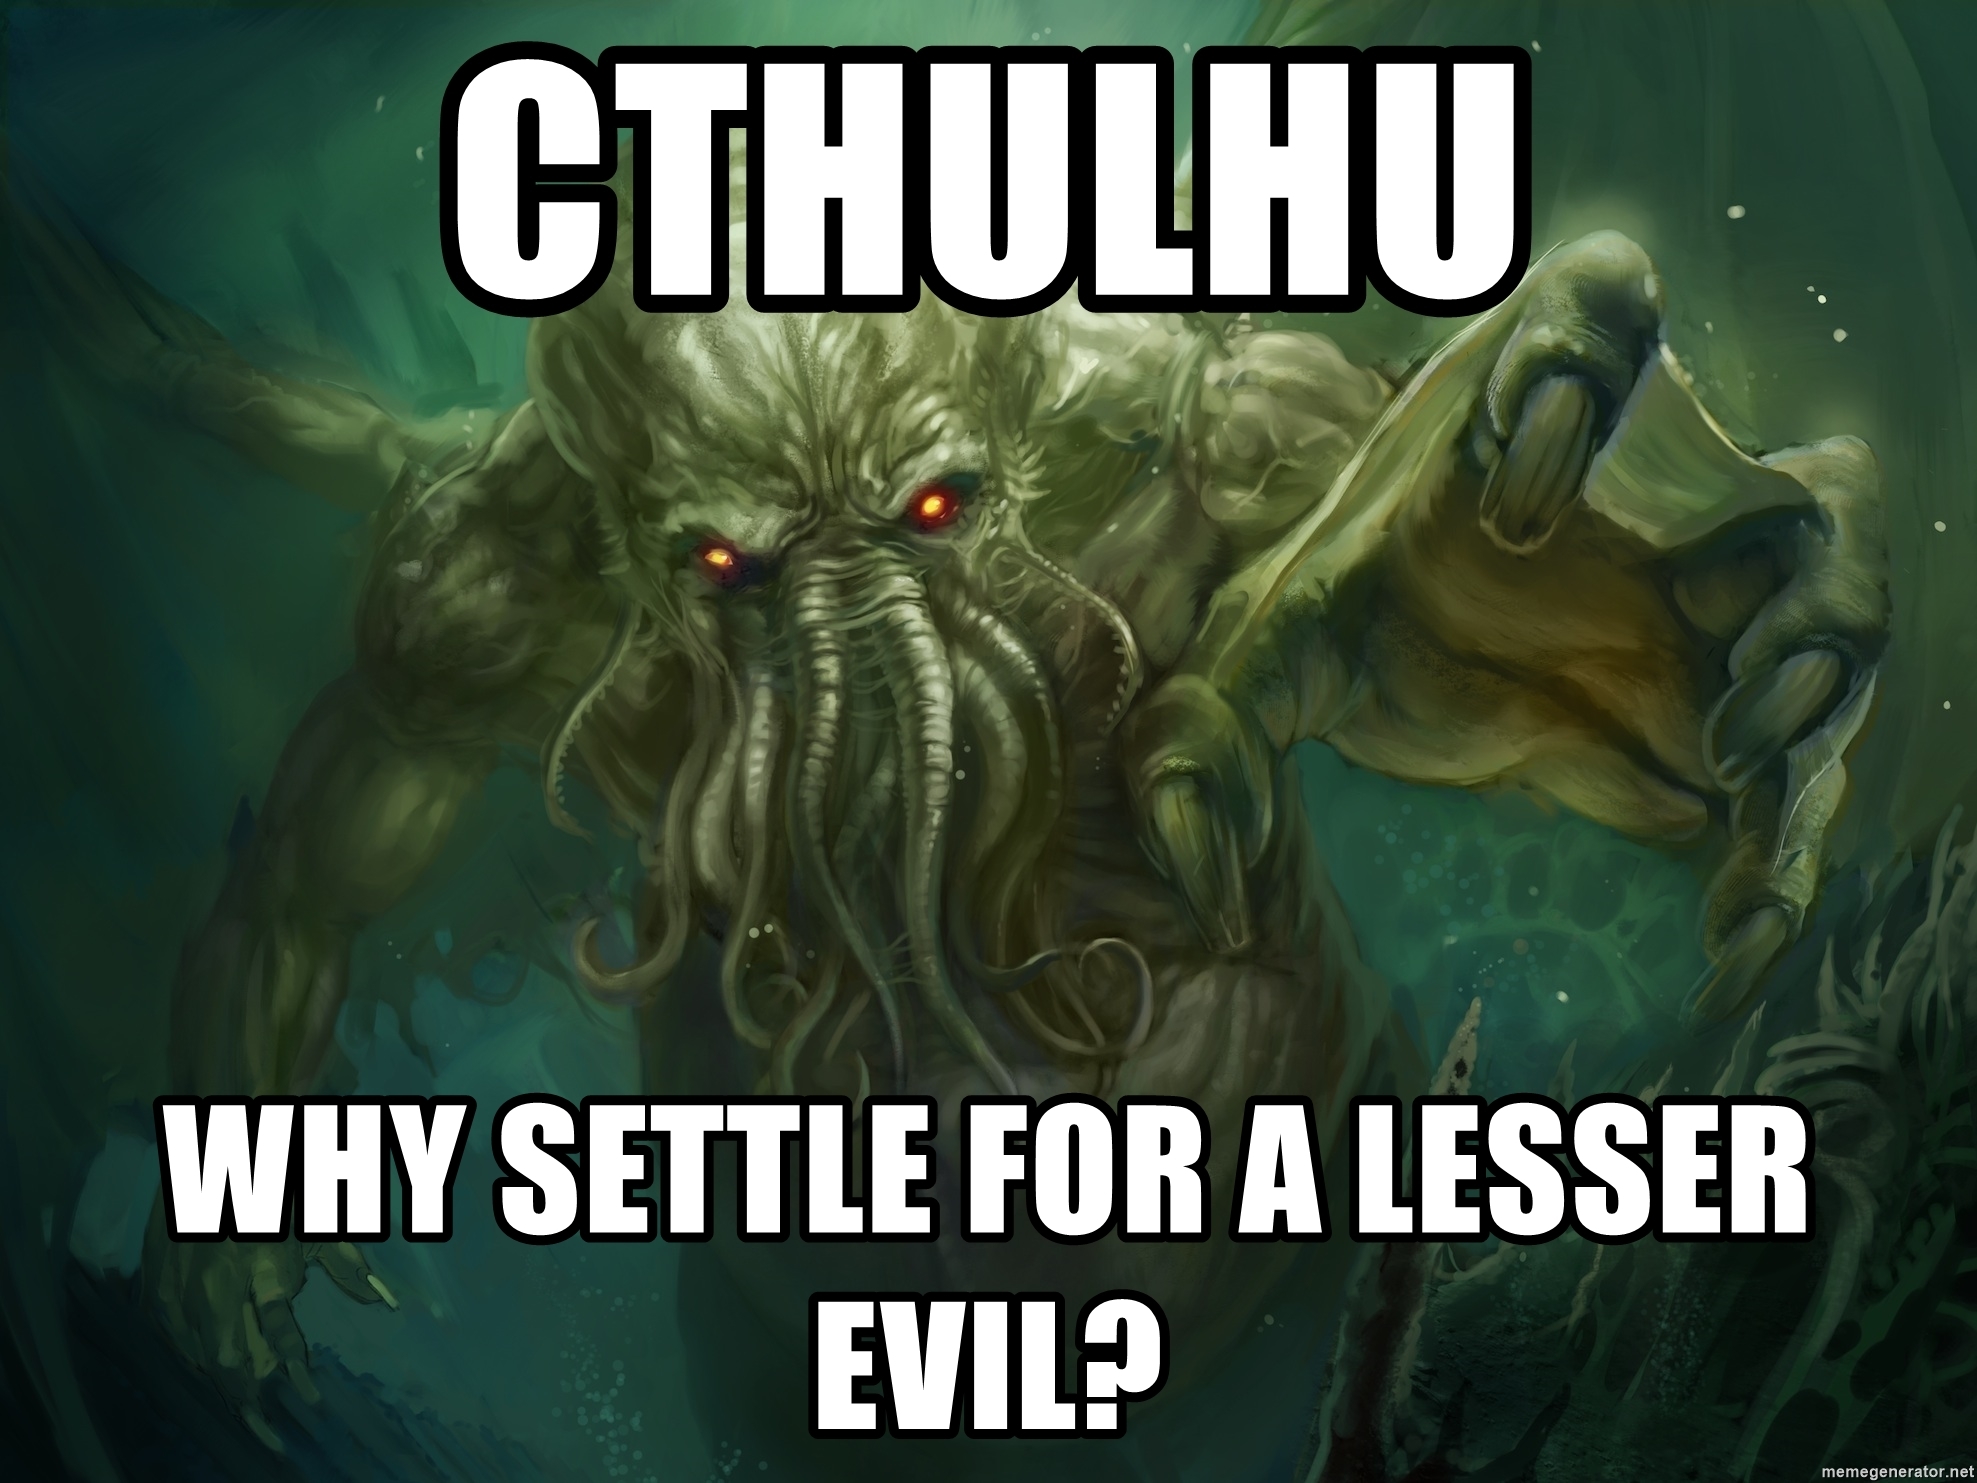 cthulhu-why-settle-for-a-lesser-evil.jpg